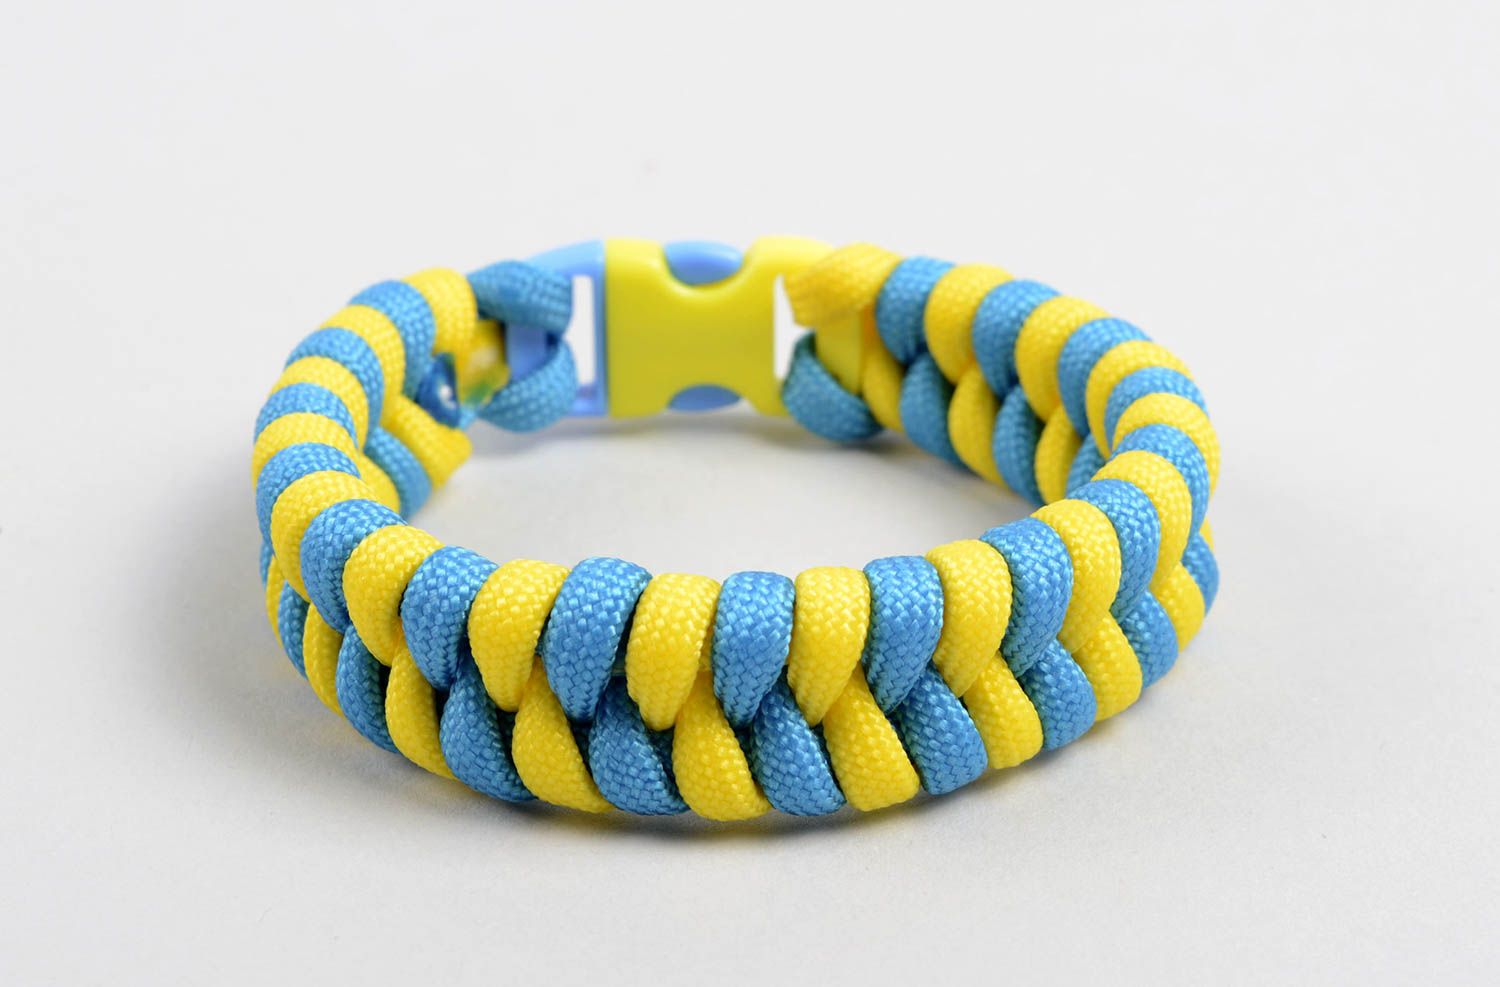 Beautiful handmade woven bracelet paracord bracelet survival tips gift ideas photo 1